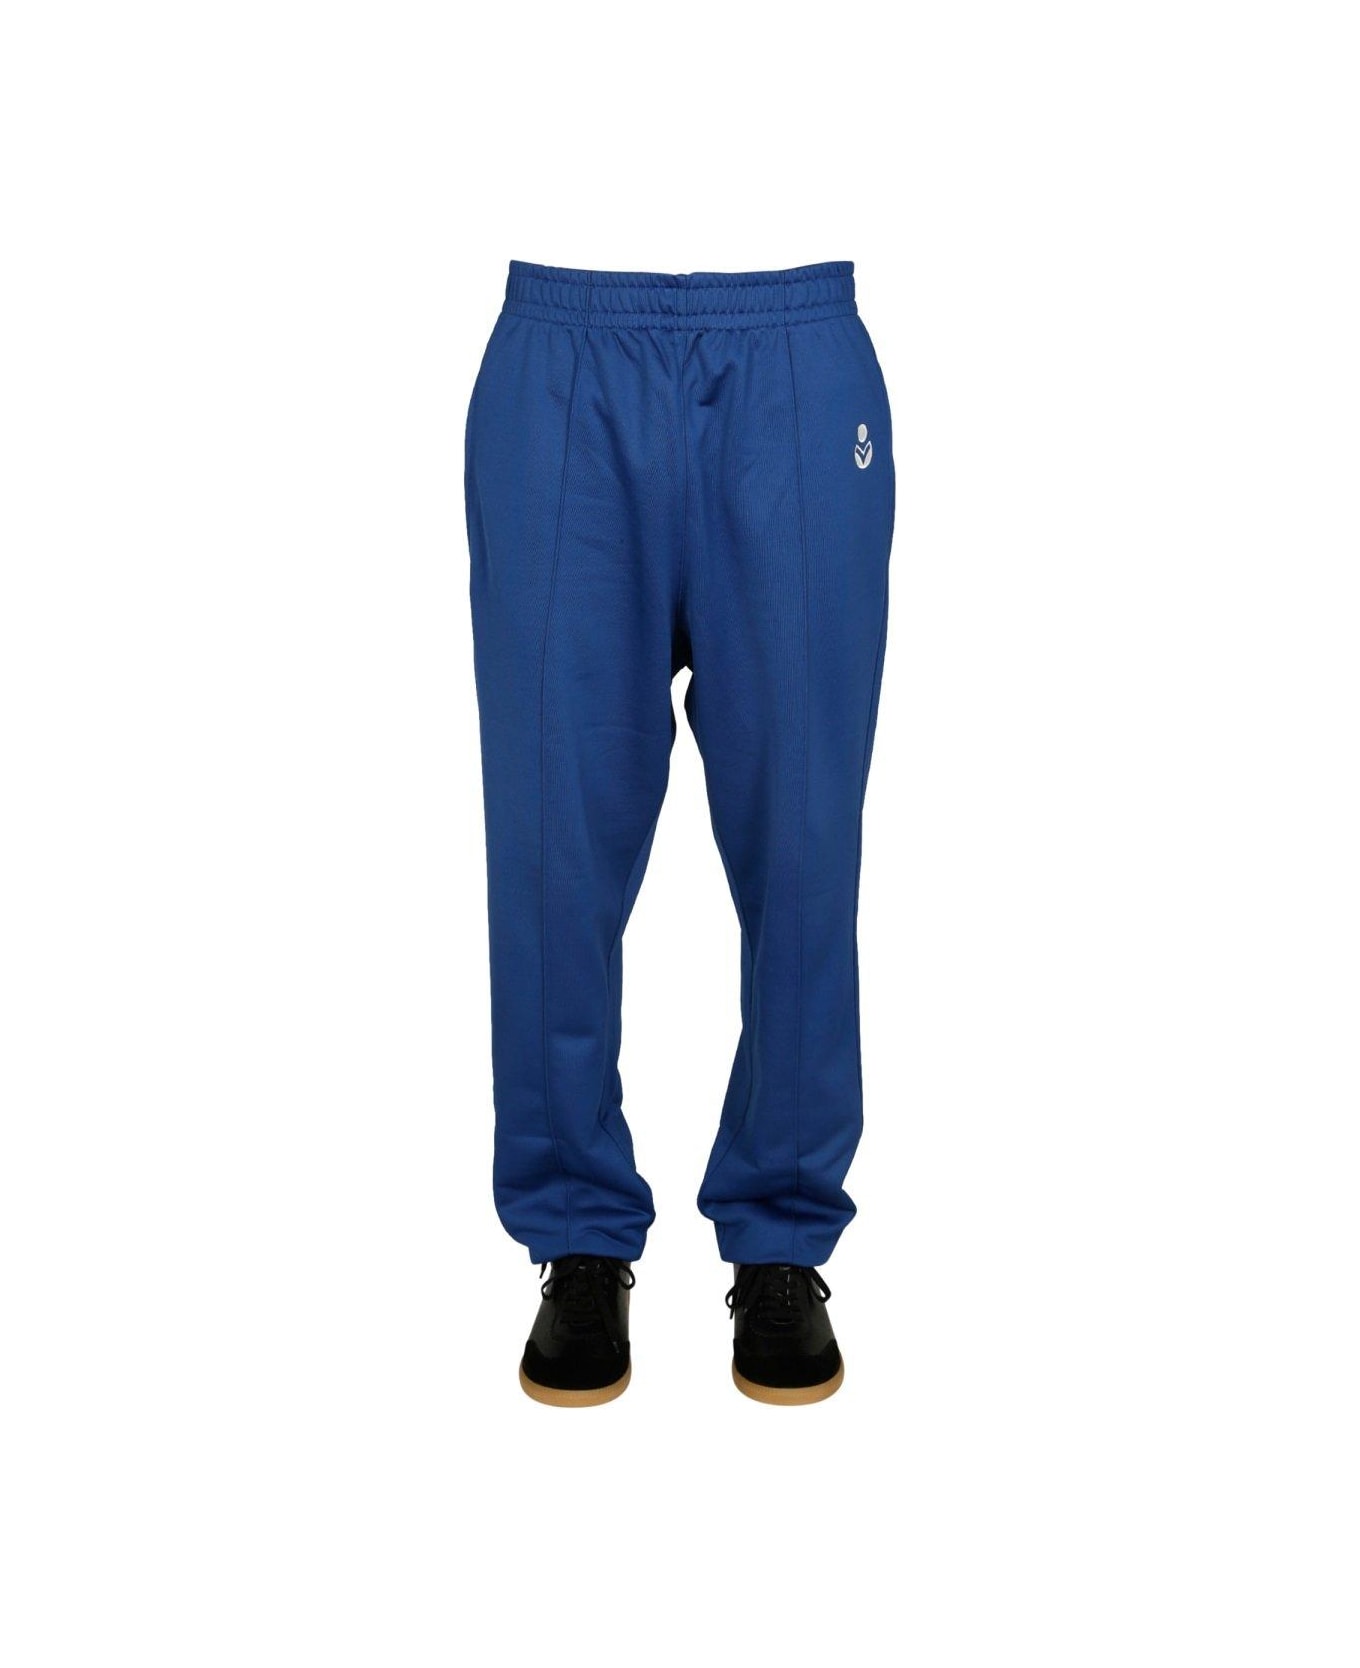 Isabel Marant Logo Printed Jogging Pants - BLUE